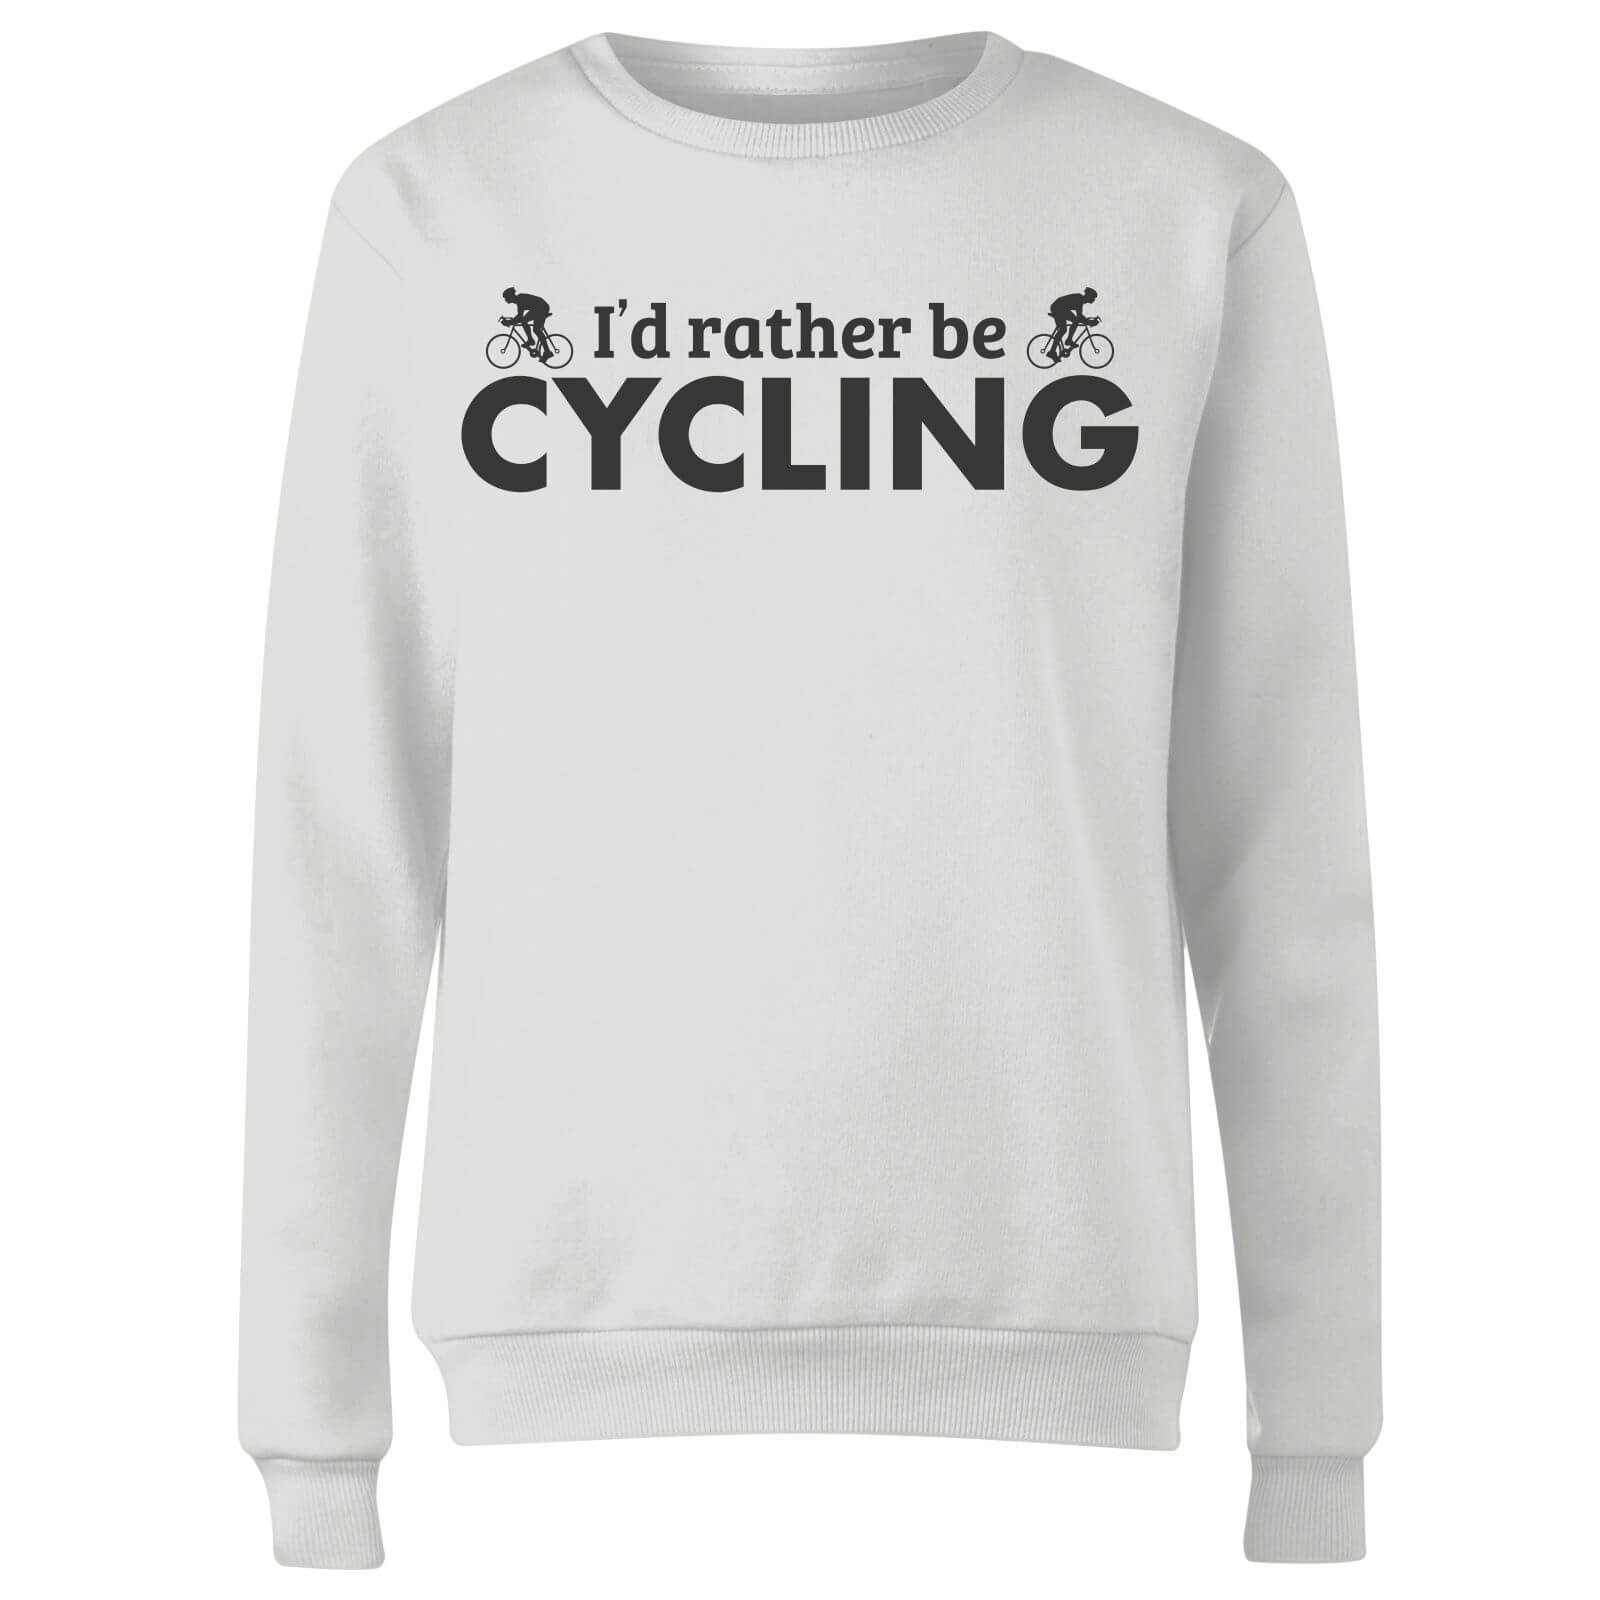 I'd Rather be Cycling Women's Sweatshirt - White - XS - White